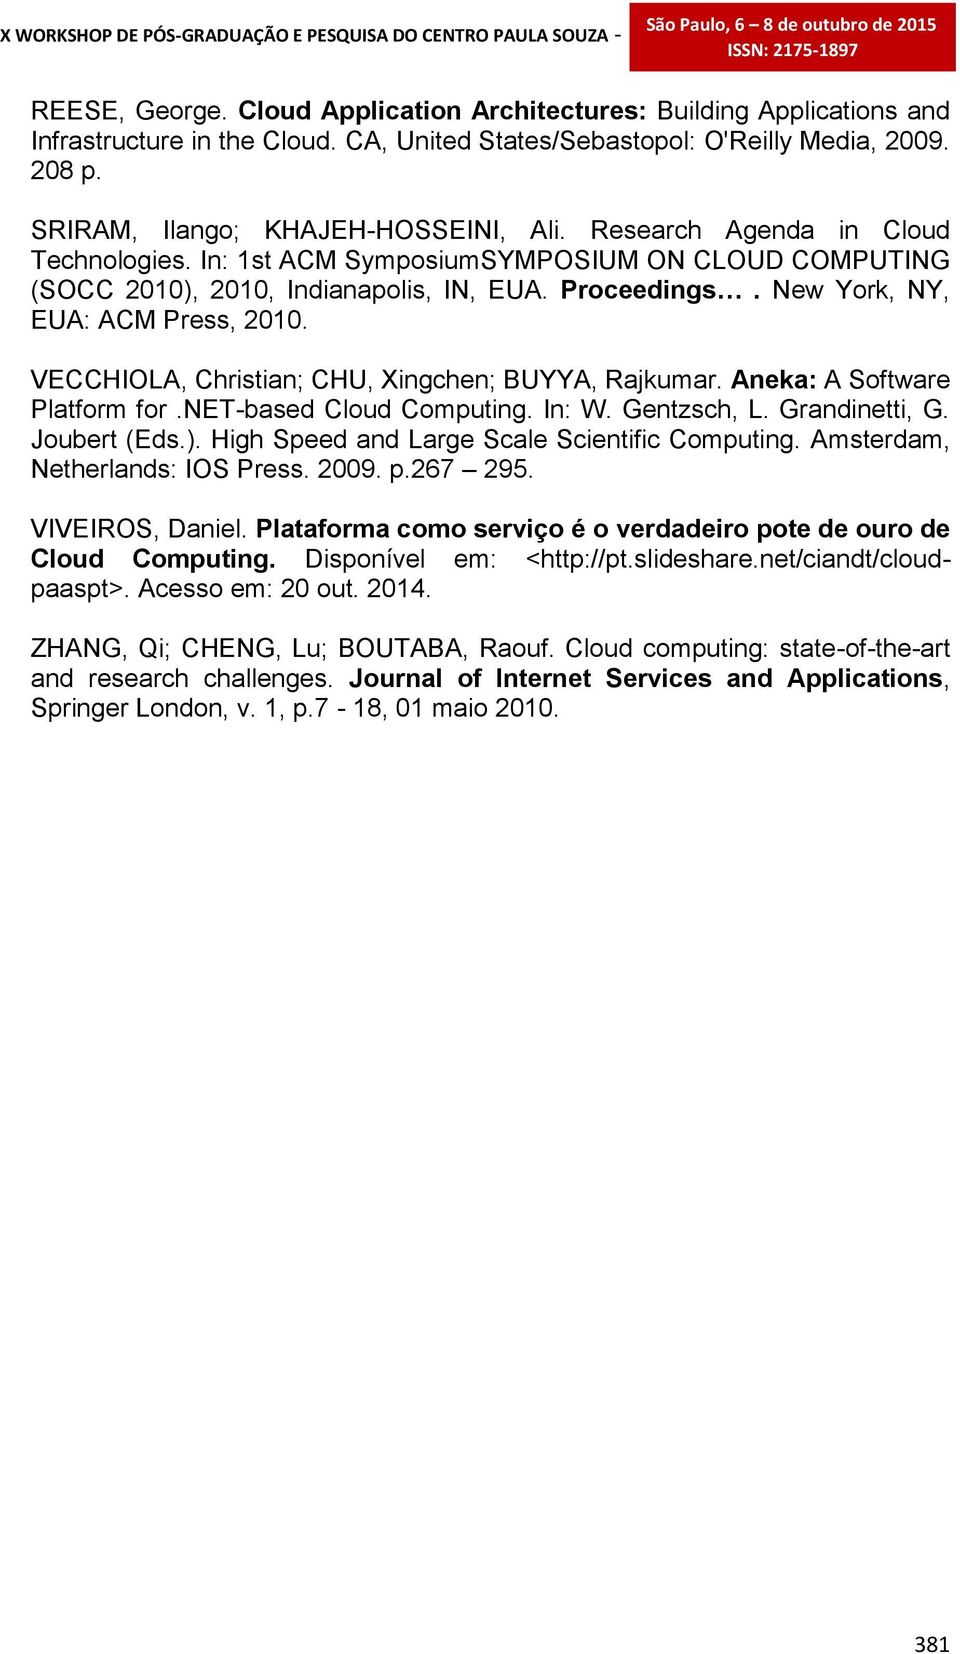 VECCHIOLA, Christian; CHU, Xingchen; BUYYA, Rajkumar. Aneka: A Software Platform for.net-based Cloud Computing. In: W. Gentzsch, L. Grandinetti, G. Joubert (Eds.).